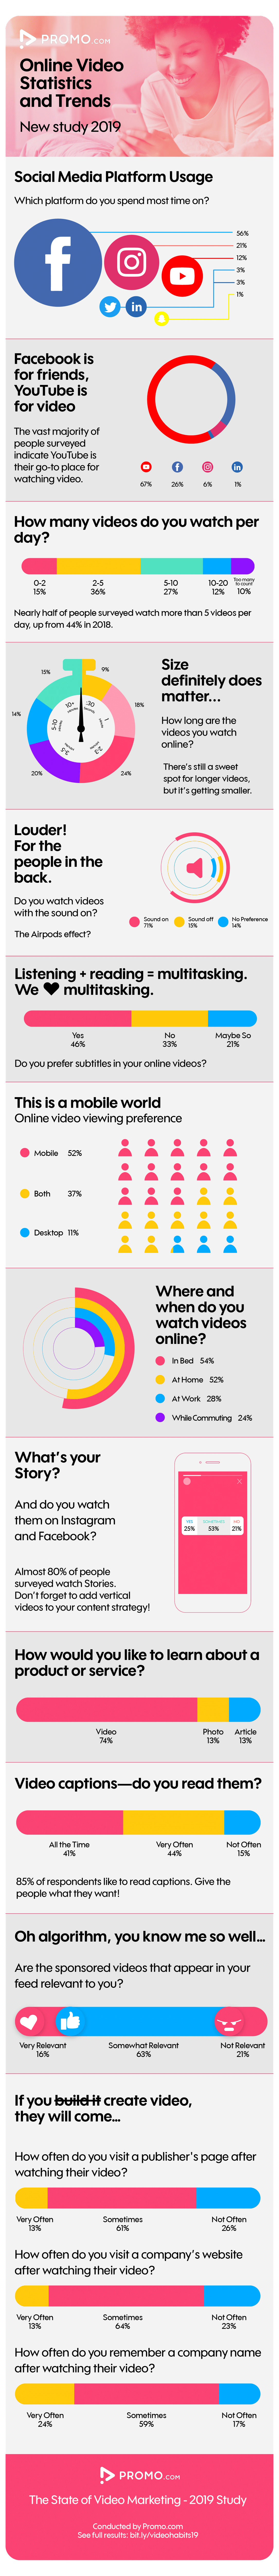 video watching habits